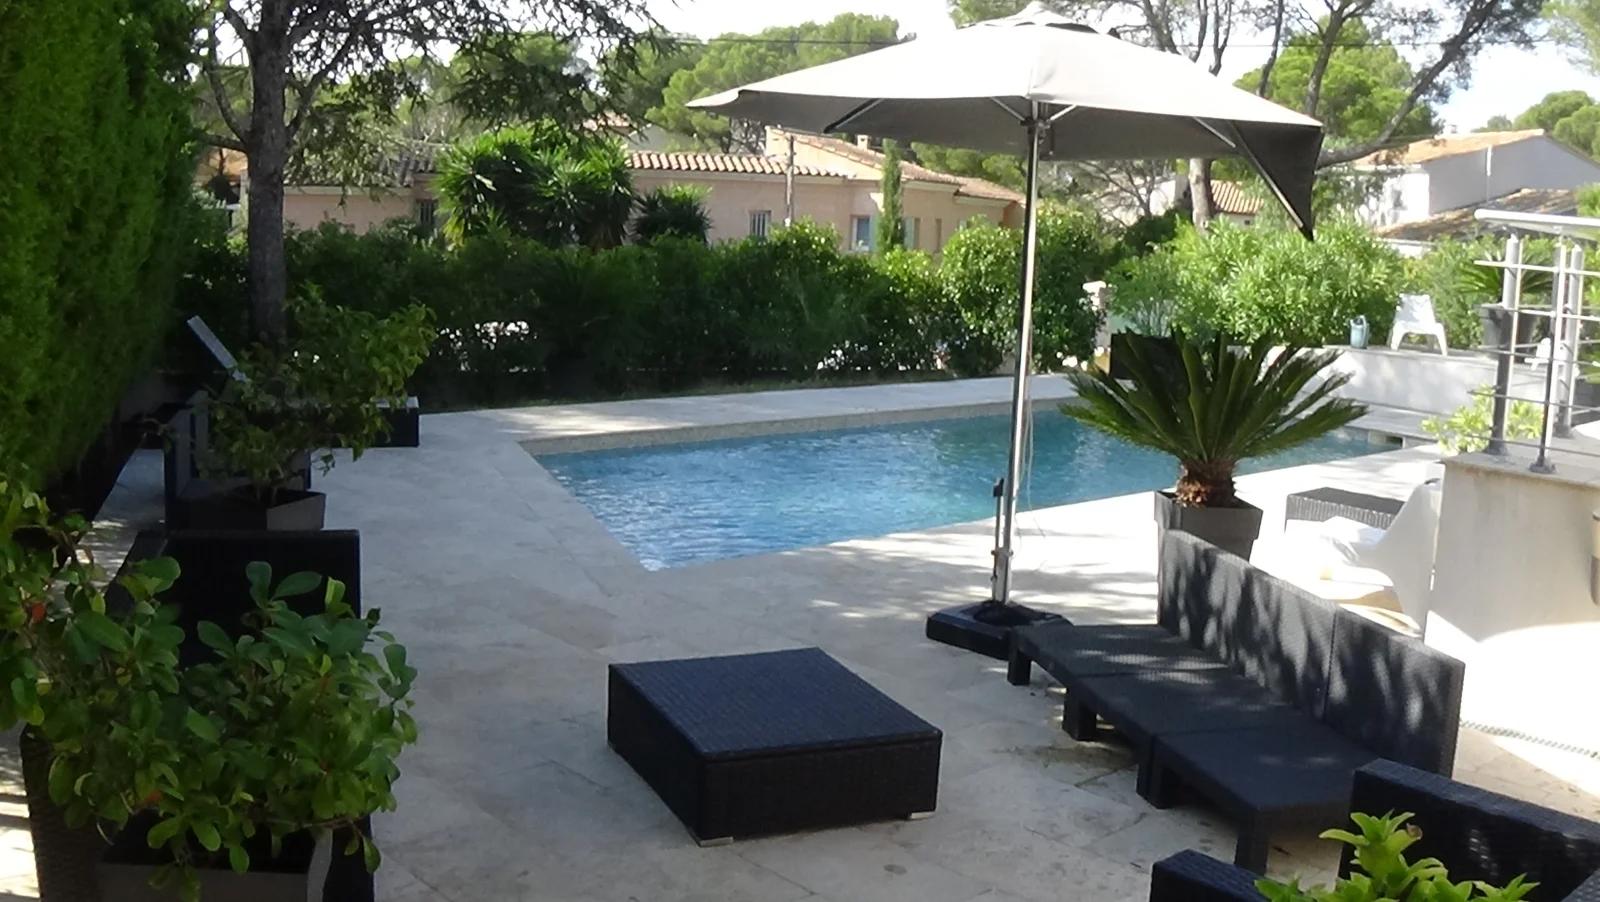 Meeting room in Attached villa / terrace / garden / pool - 1